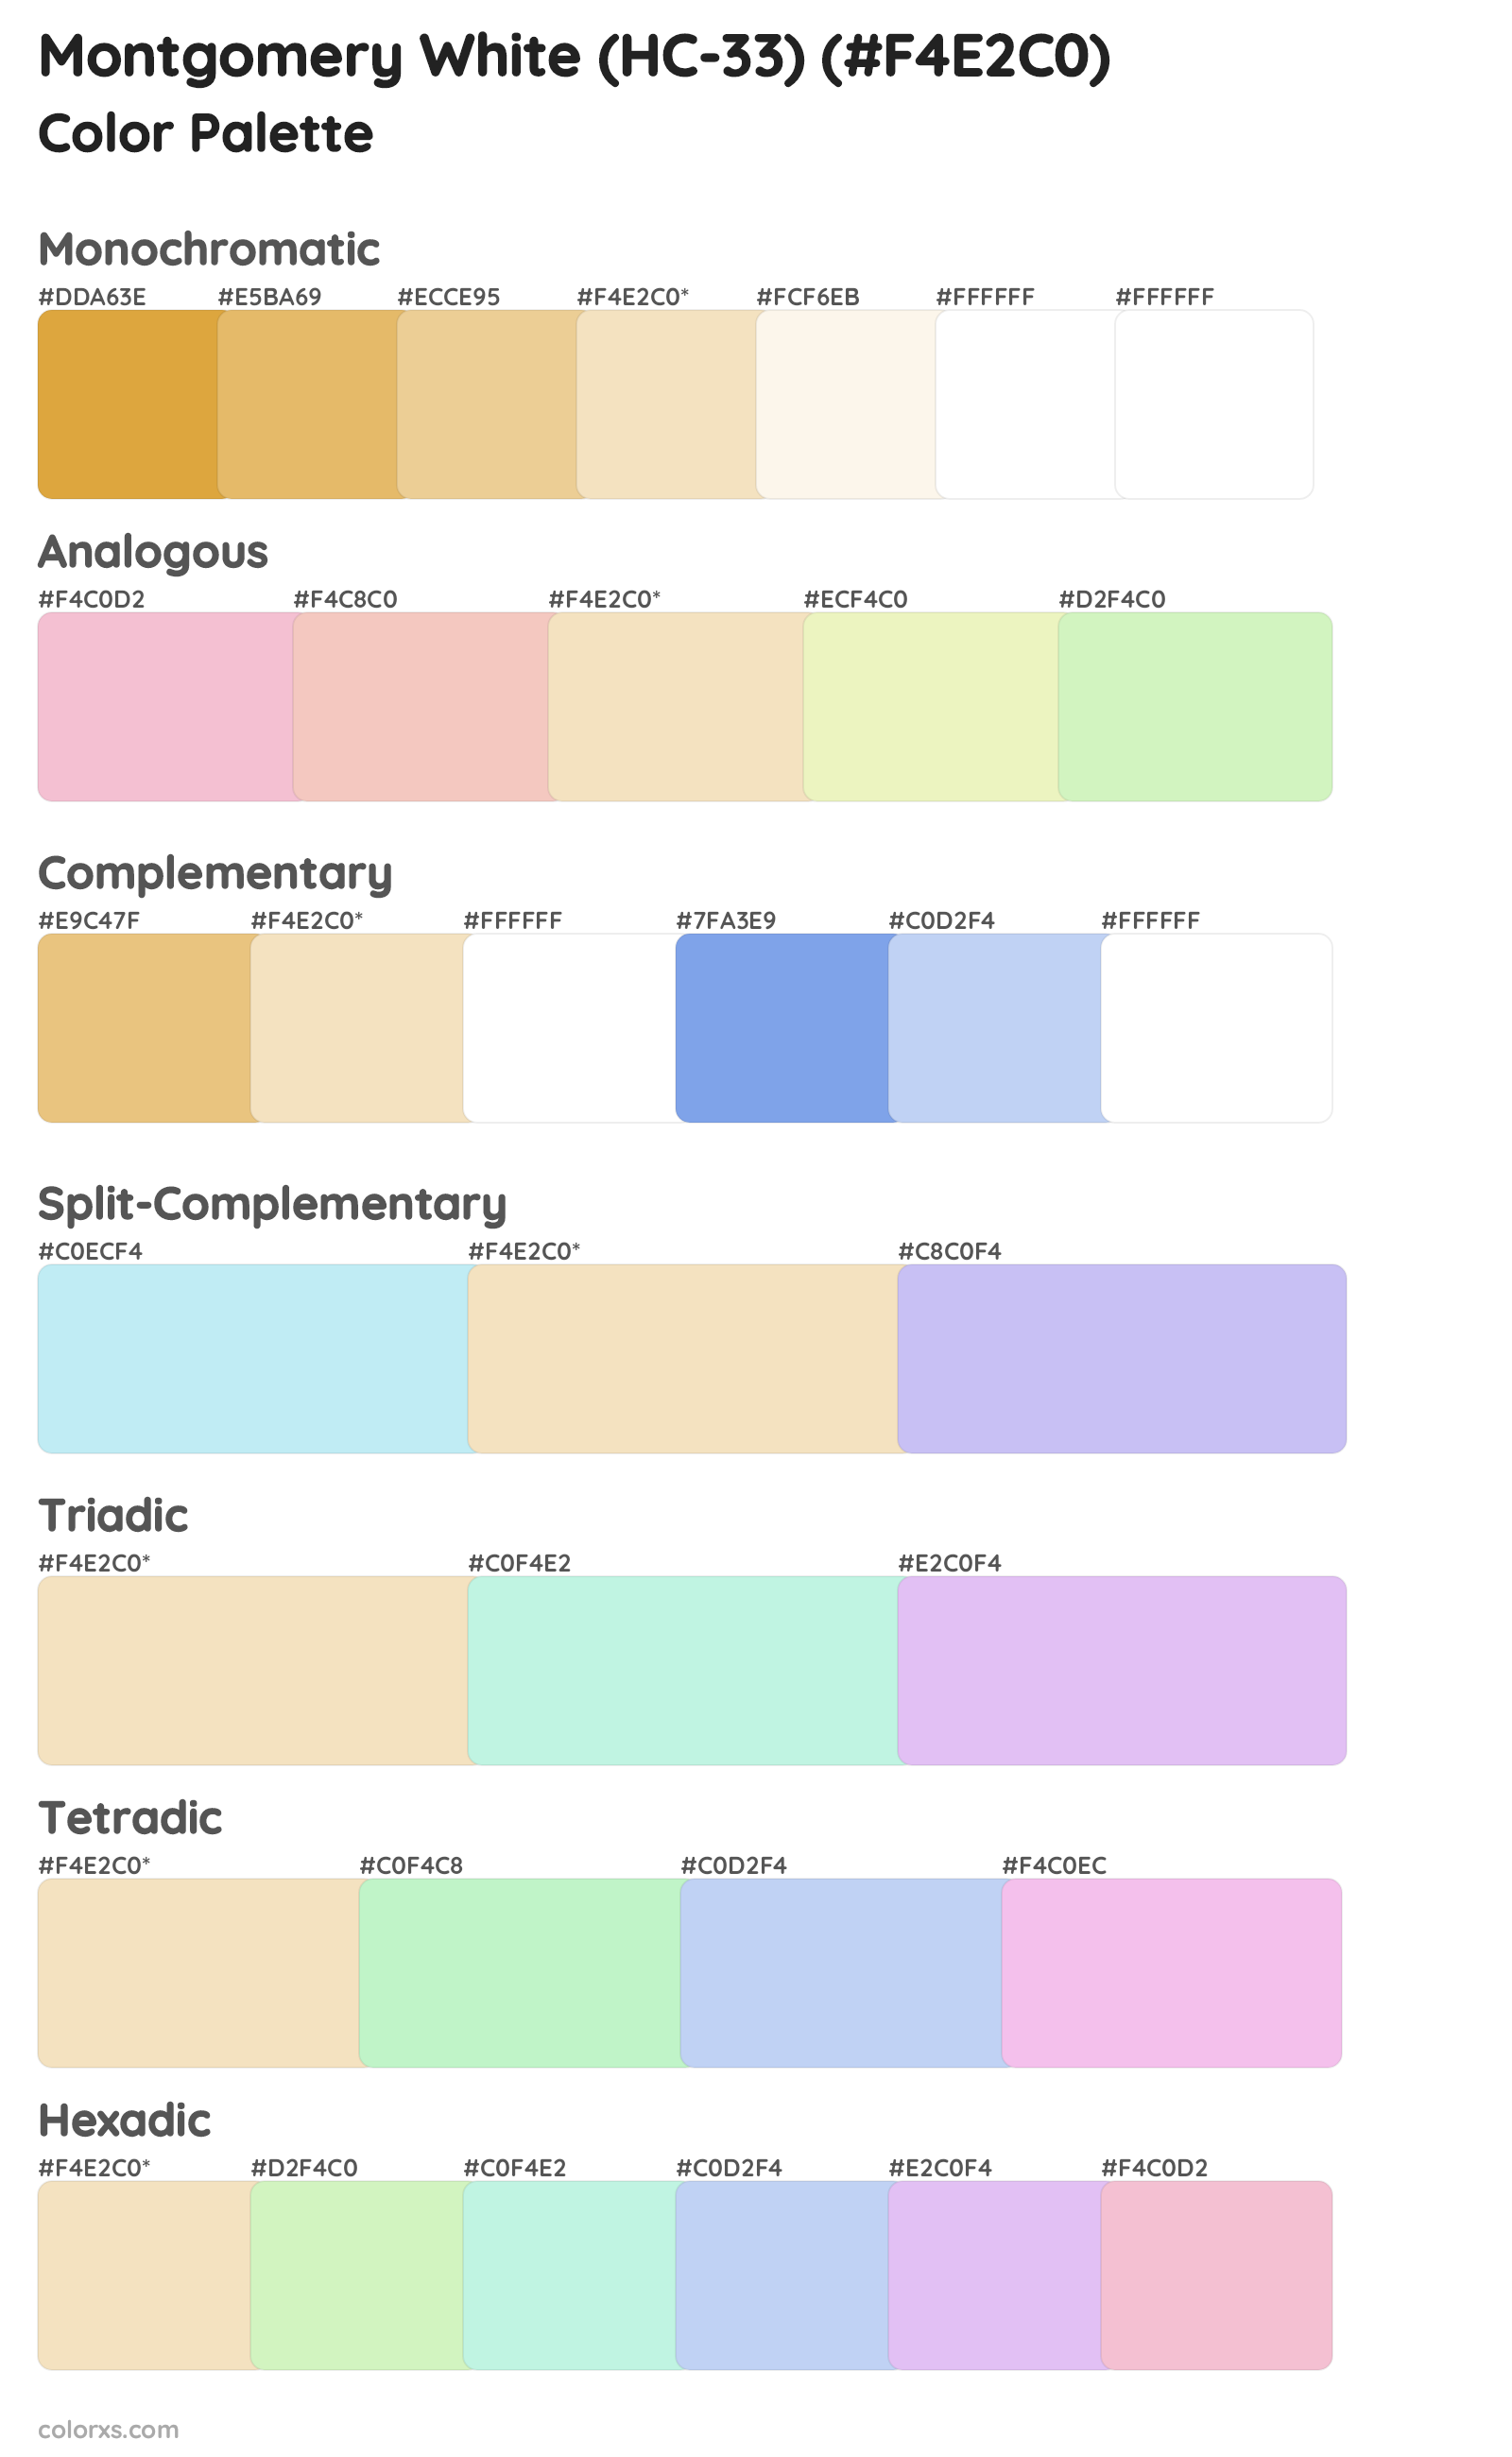 Montgomery White (HC-33) Color Scheme Palettes